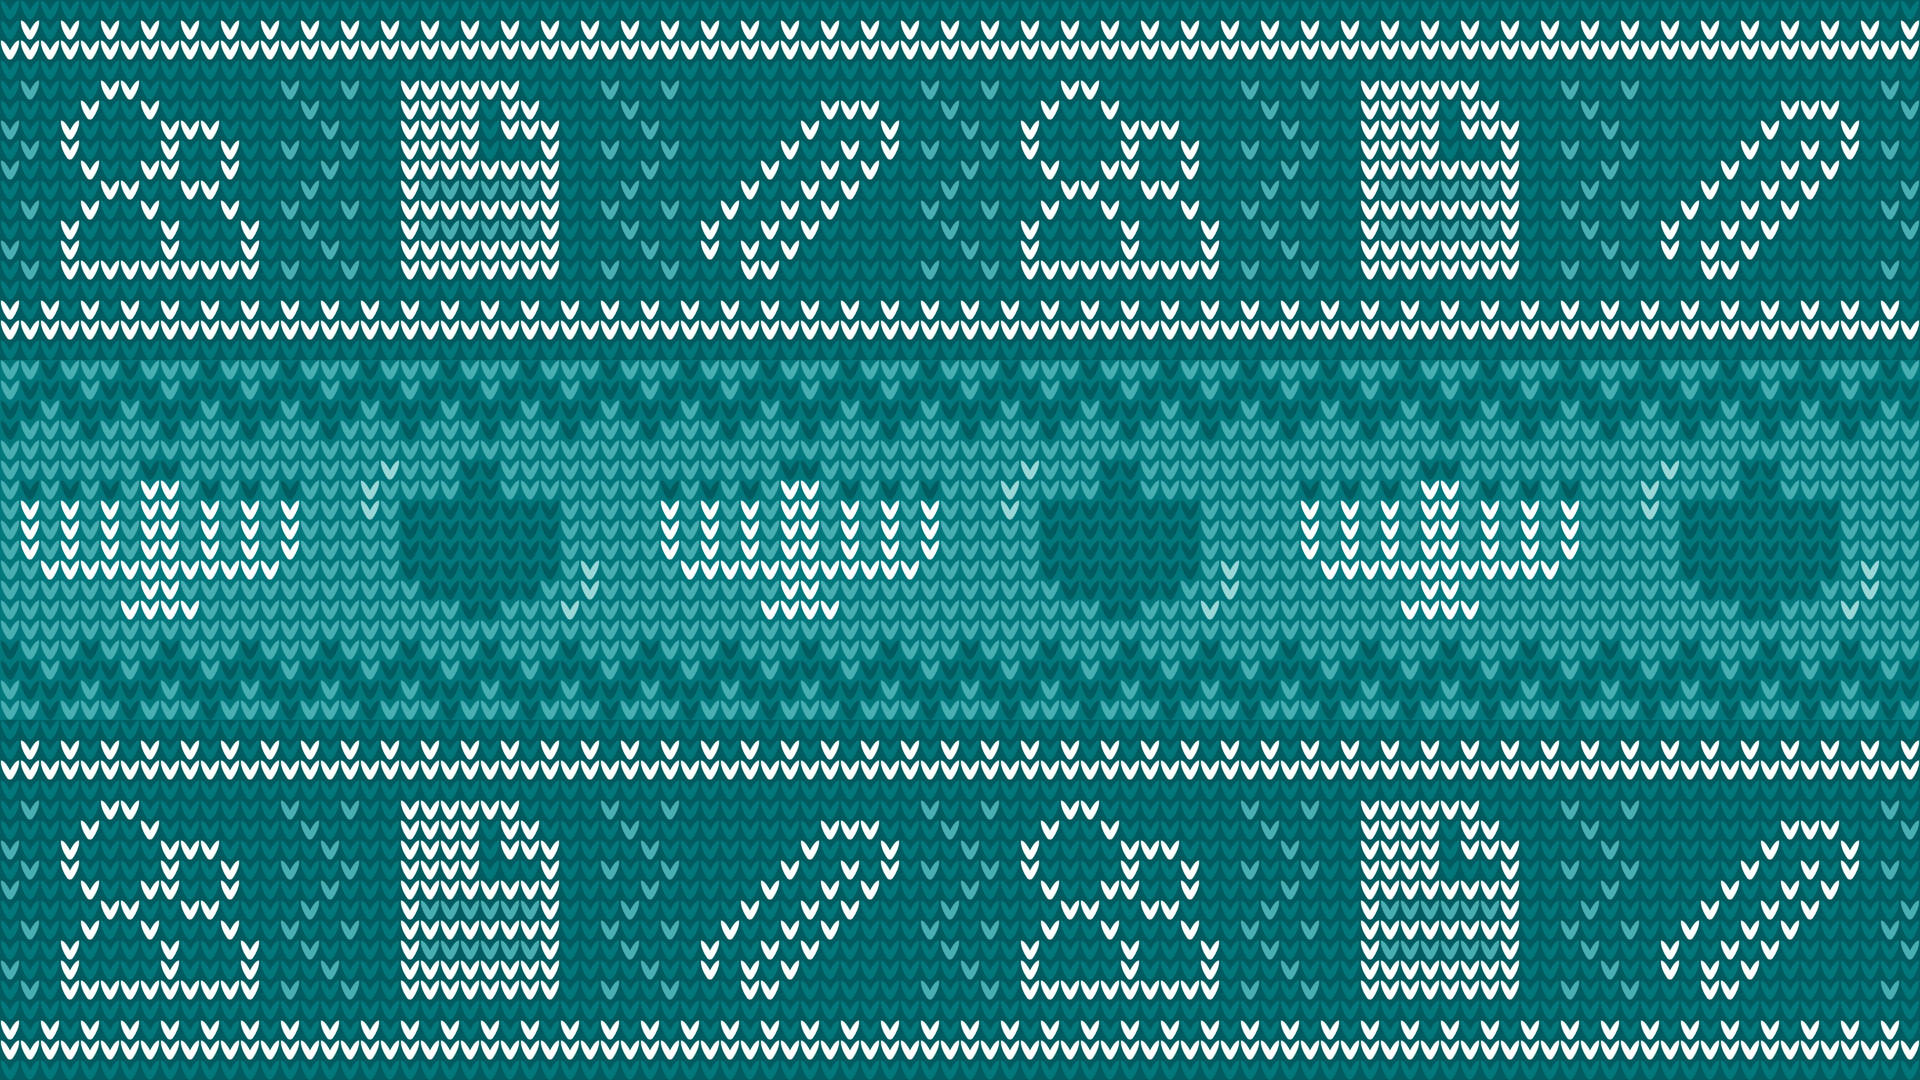 Hanukkah Sweater Pattern Art Background